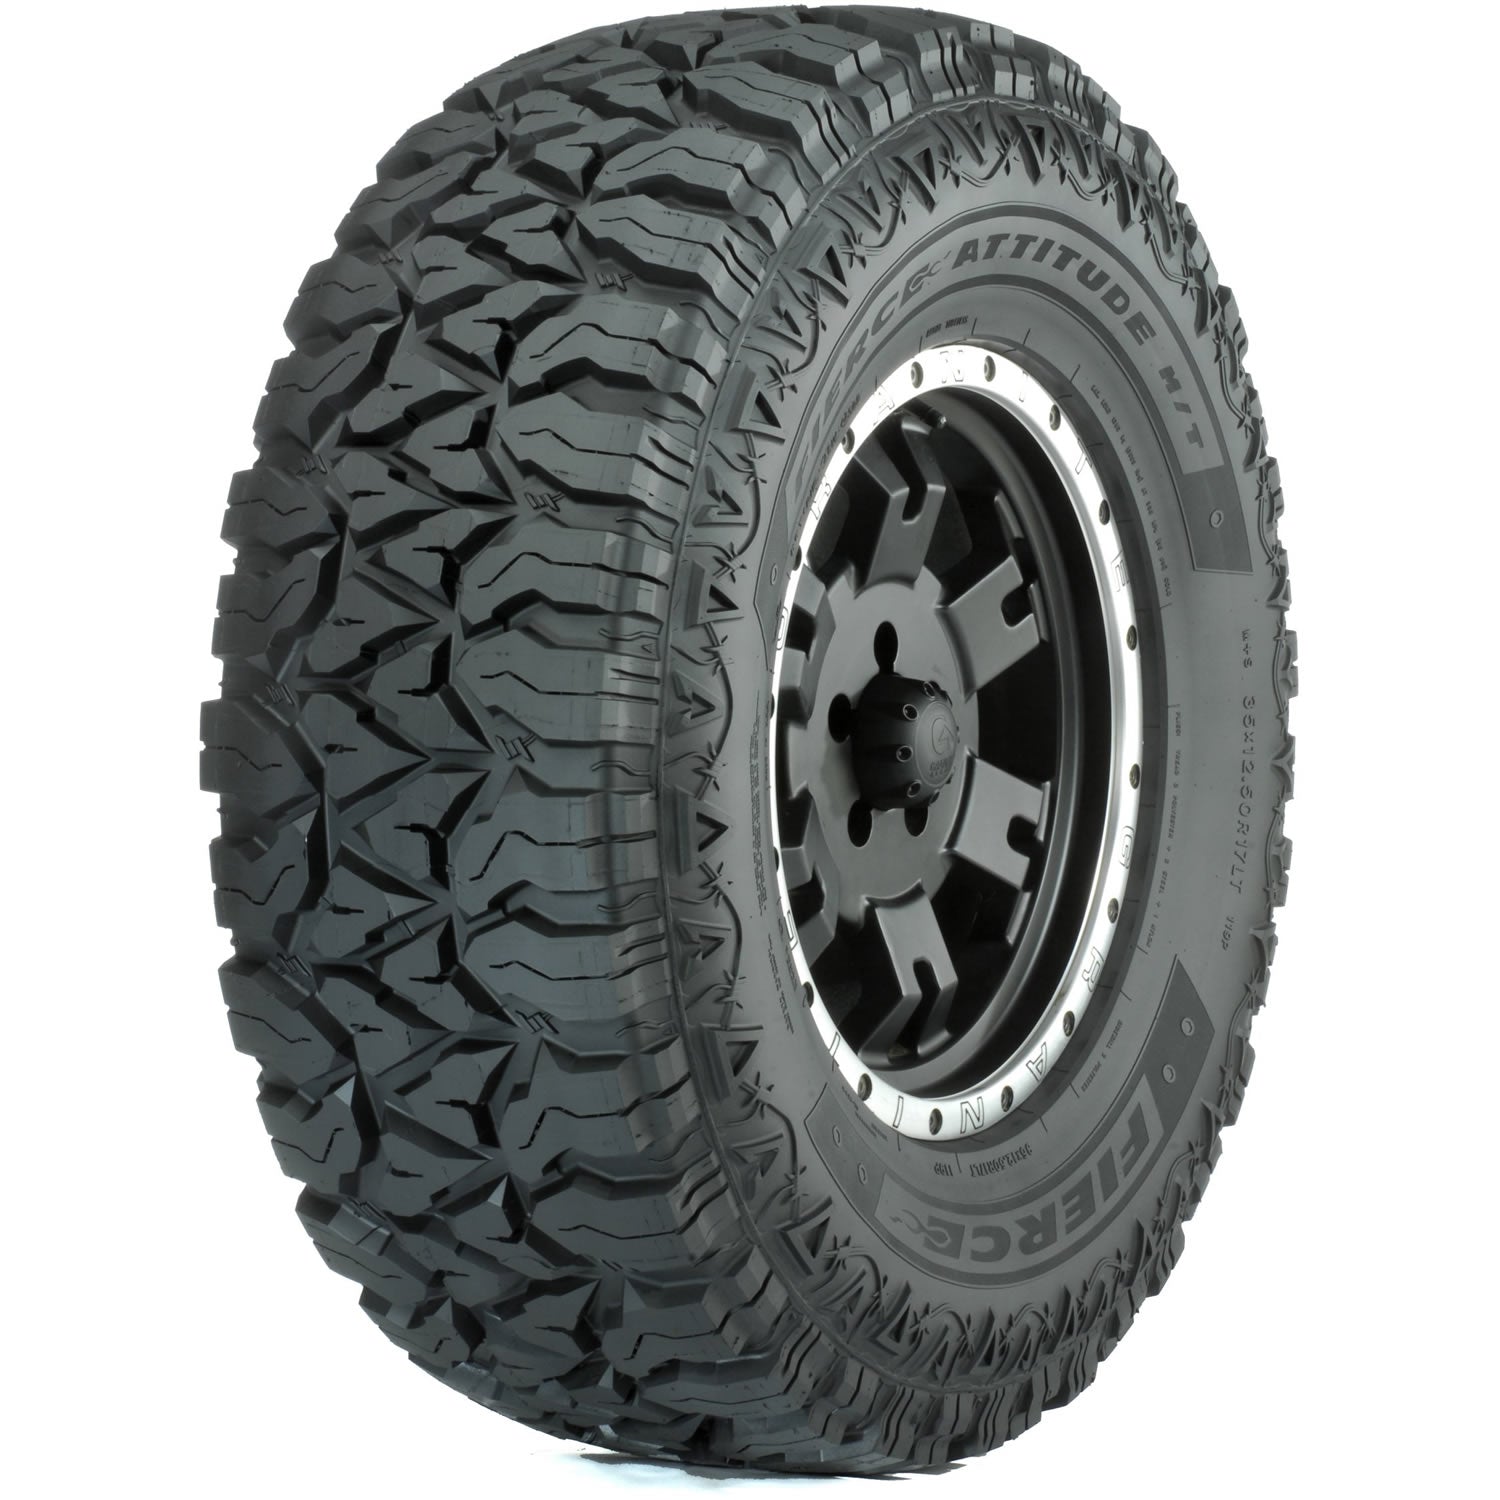 FIERCE ATTITUDE MT LT315/75R16 (34.8X12.3R 16) Tires